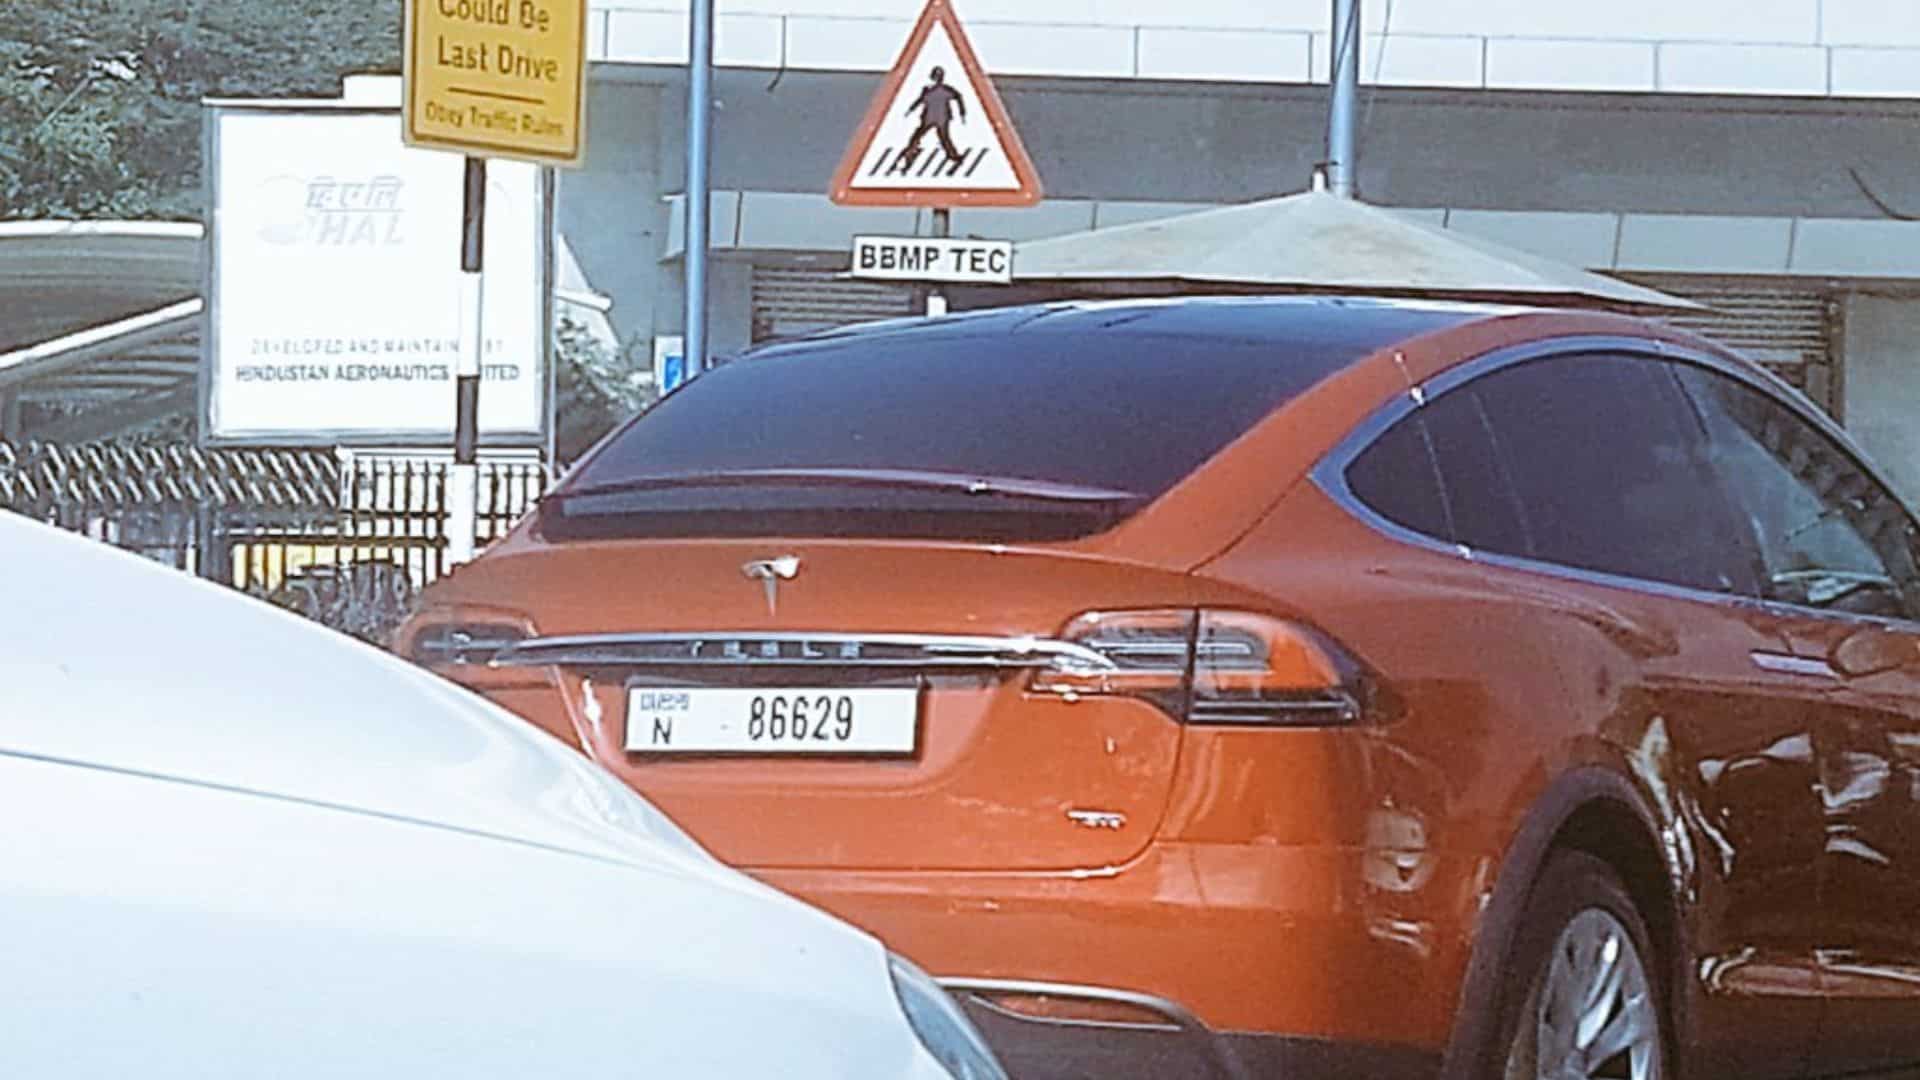 India: Tesla vehicle spotted in Bengaluru traffic, creates buzz on social media